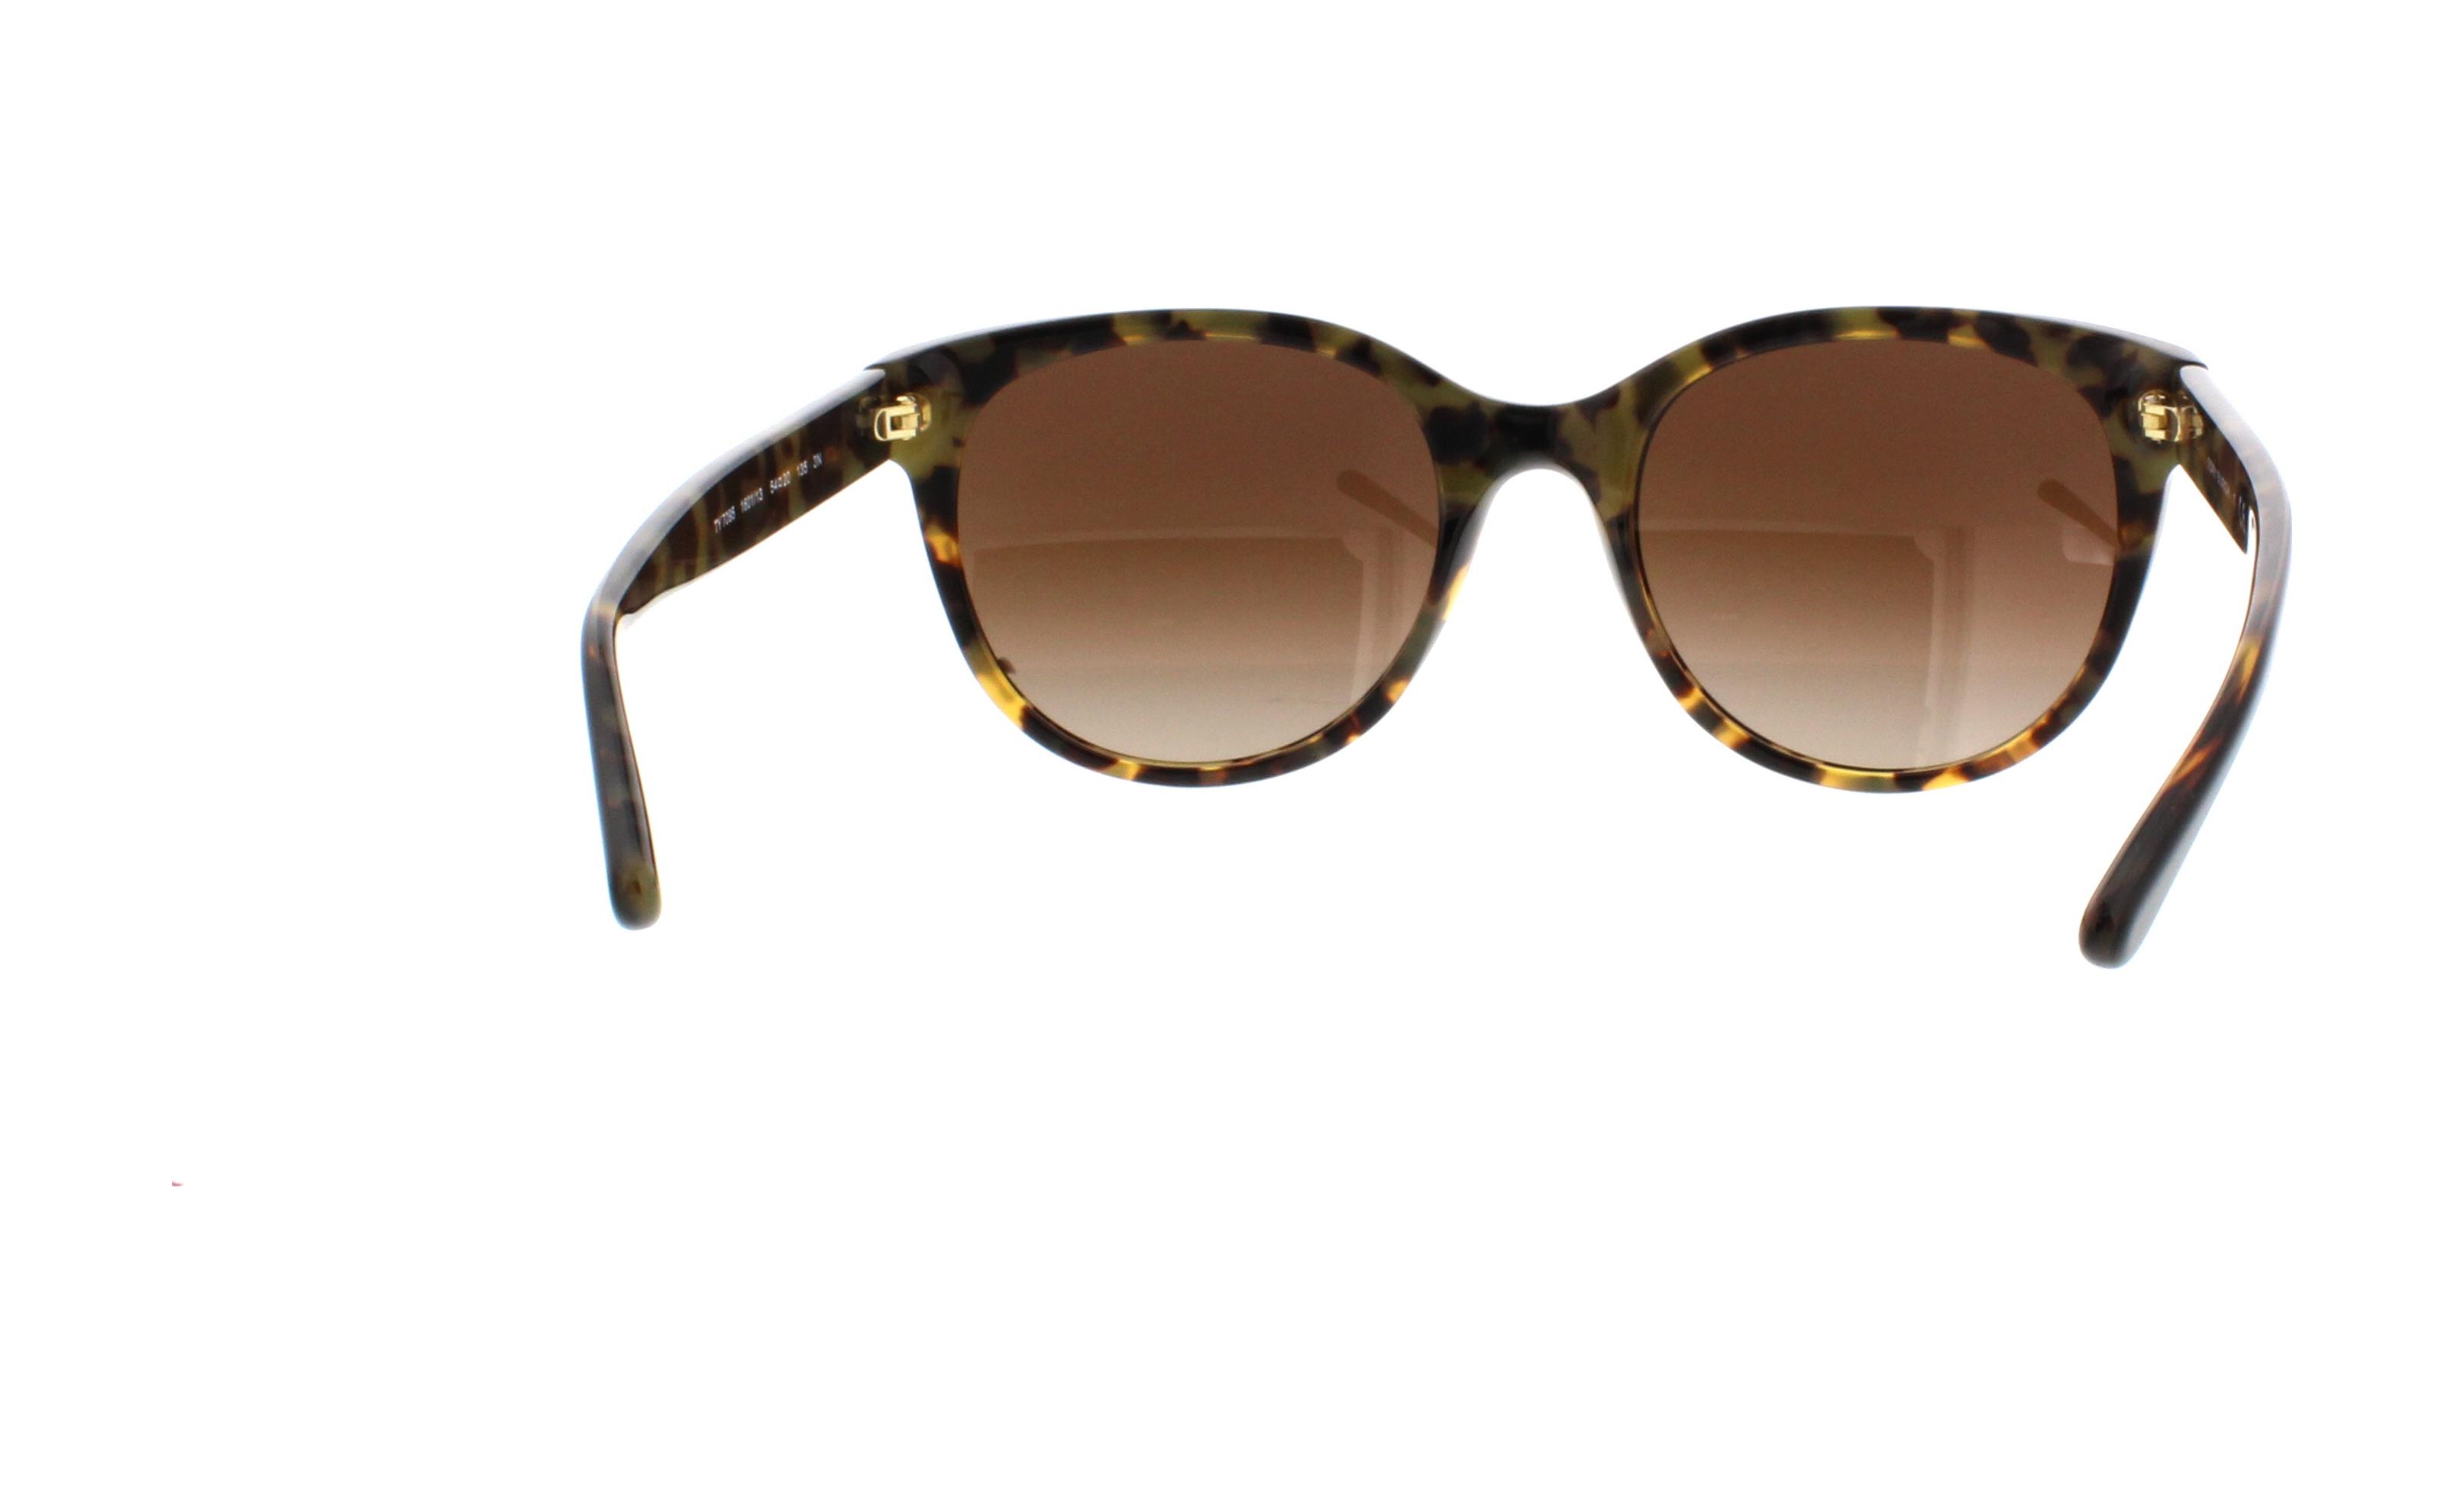 Designer Frames Outlet. Tory Burch Sunglasses TY7095